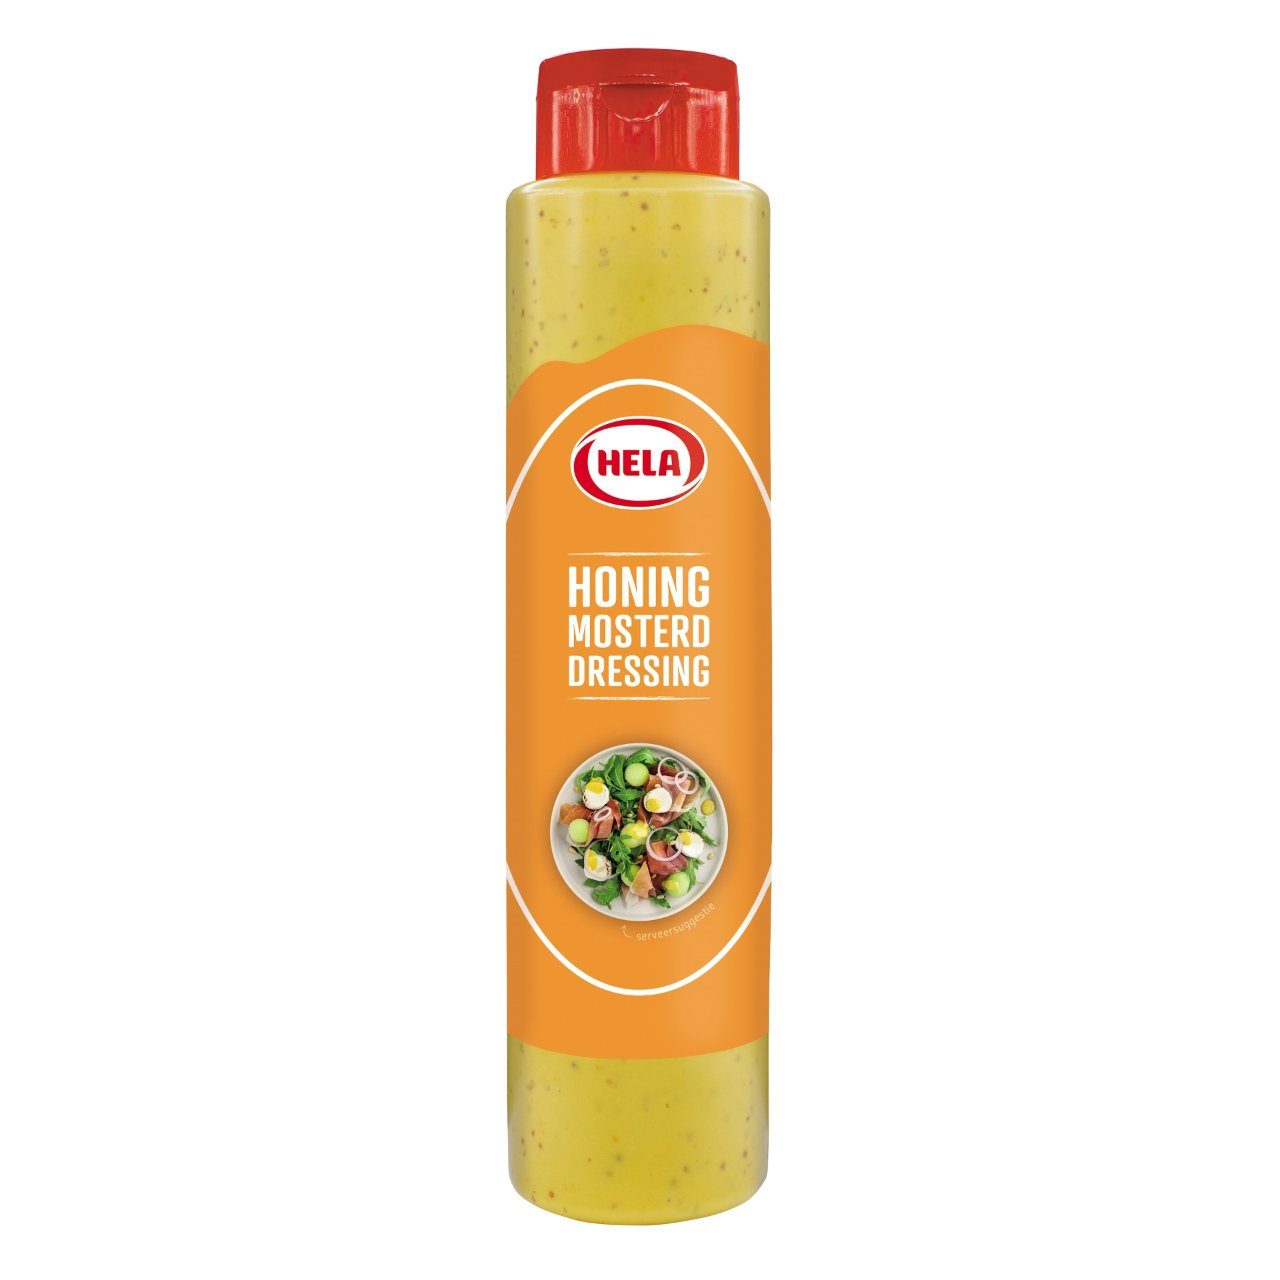 Empirisch haakje Fragiel Hela Salad & Sandwich Dressing honing mosterd Tube 80 cl | Sligro.nl